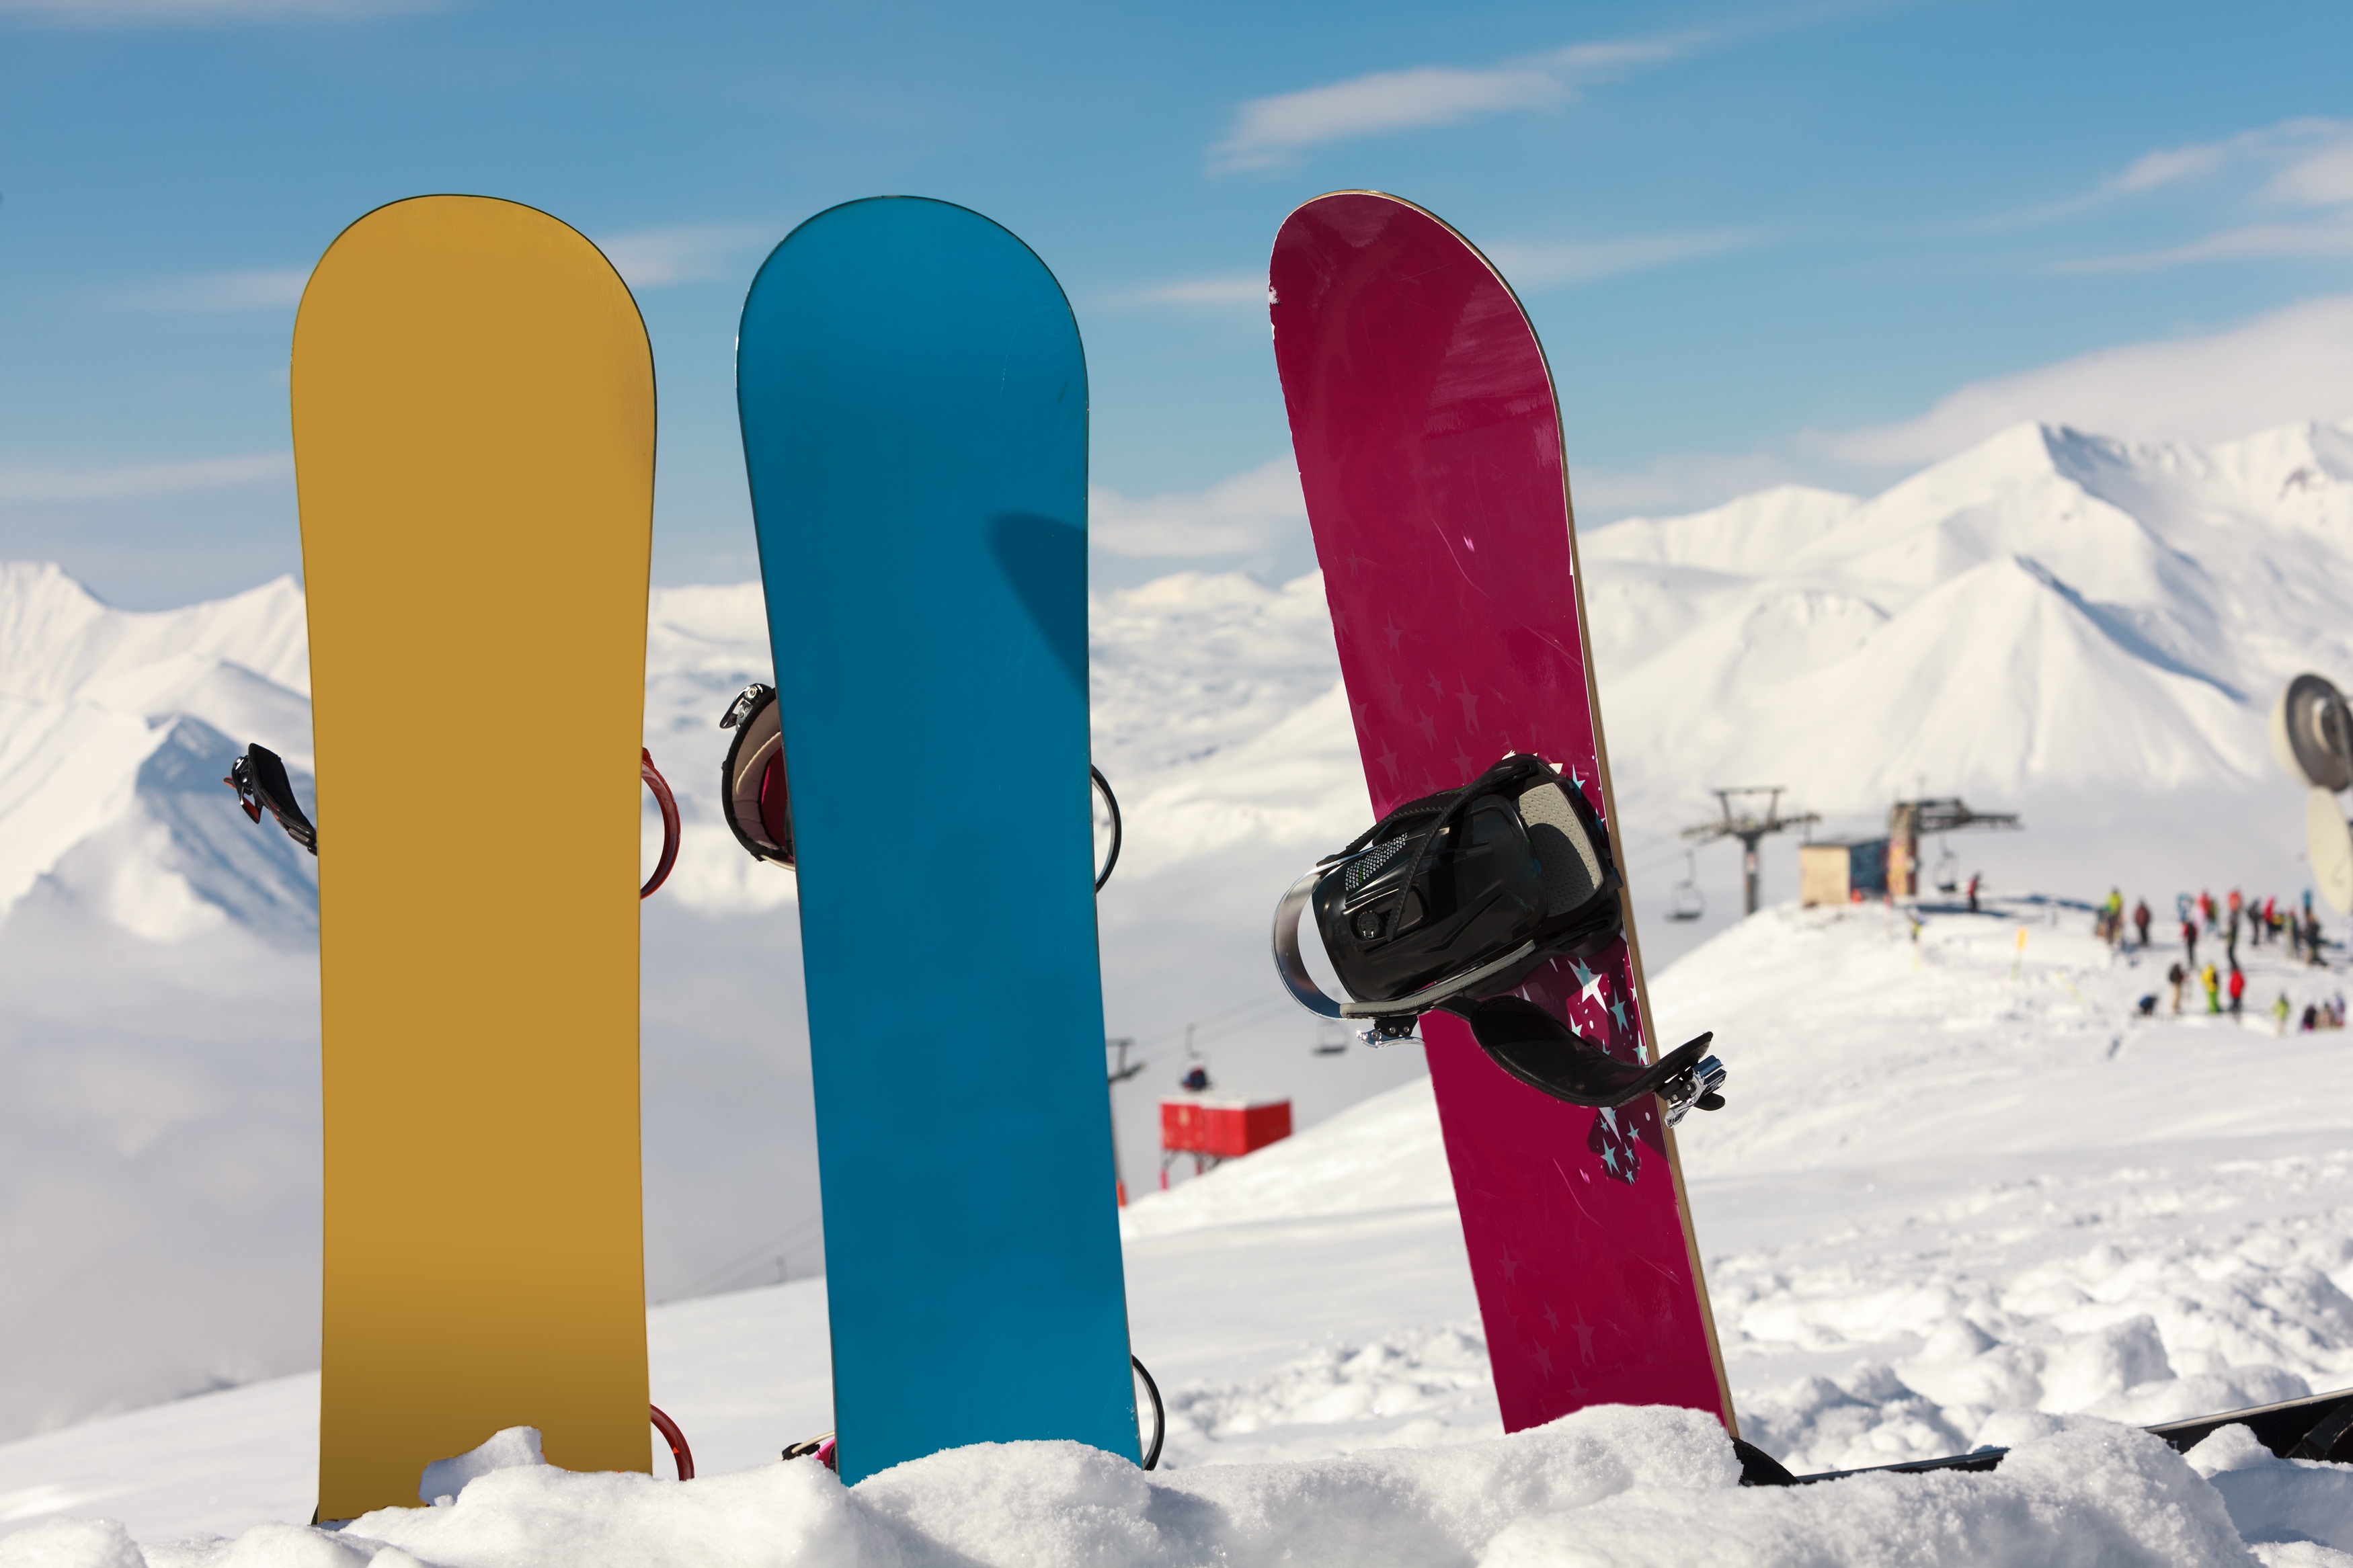 Snowboarder killed at 49 Degrees North Resort